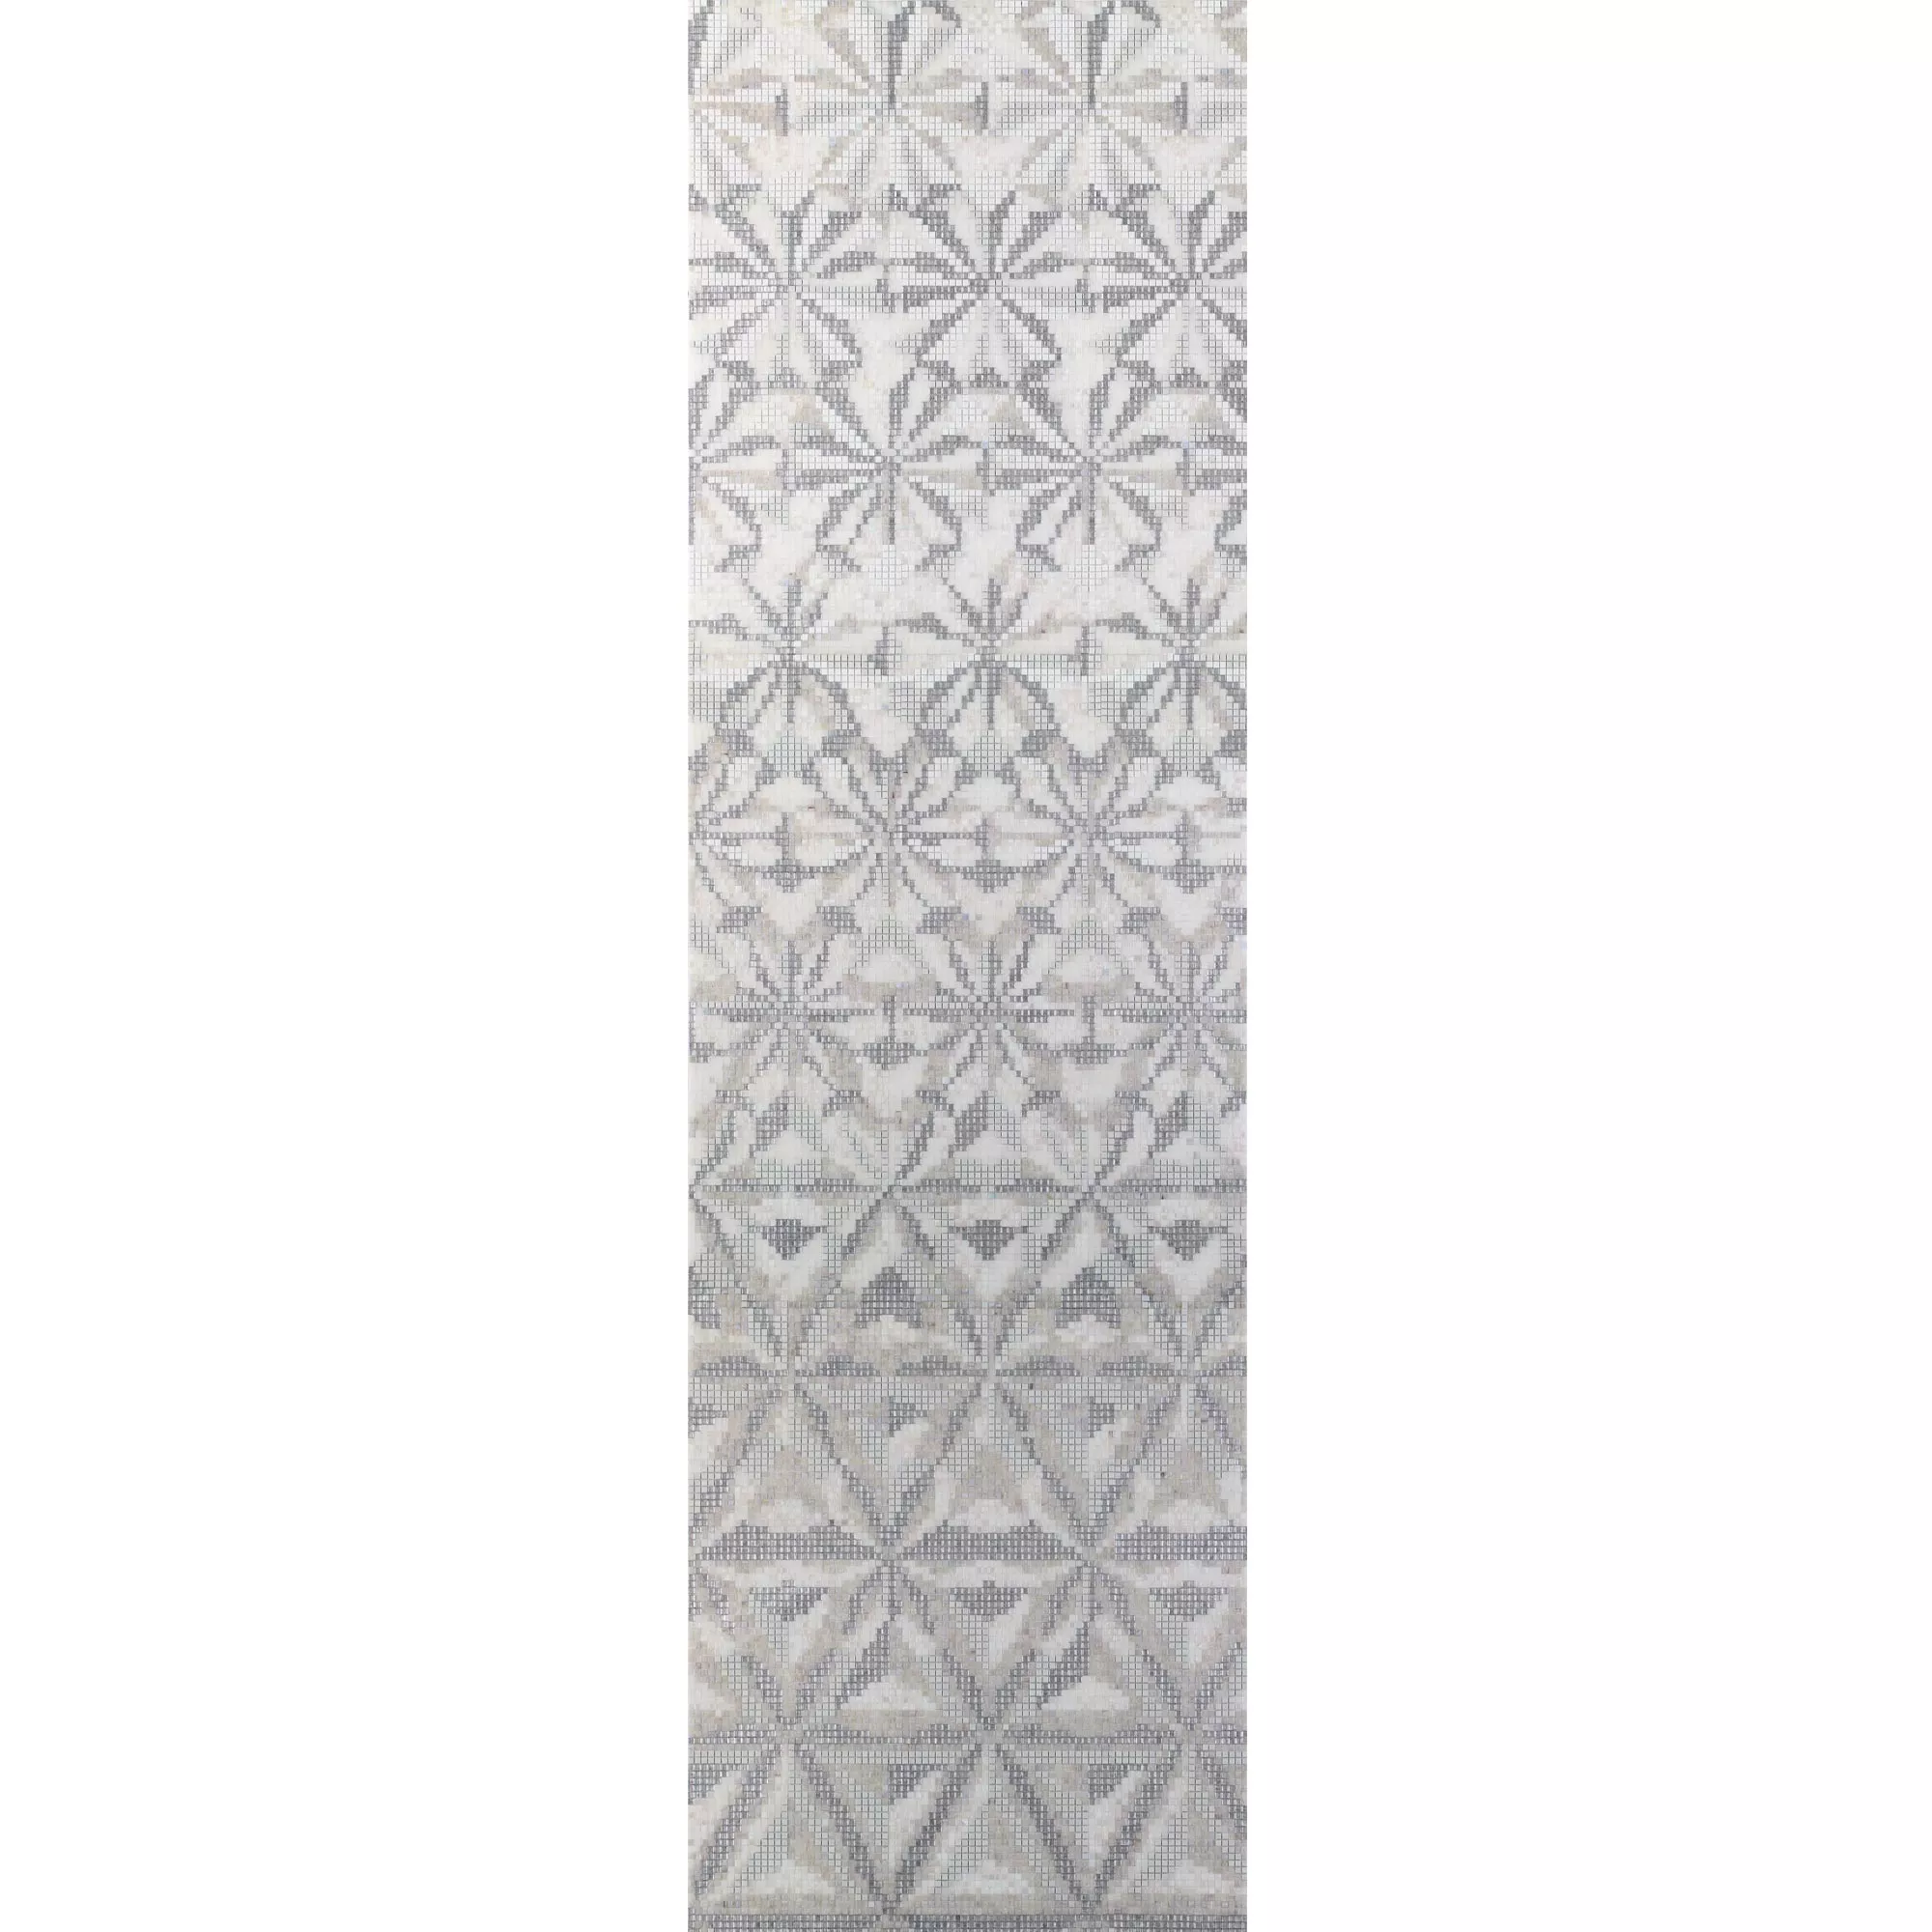 Mozaic De Sticlă Imagine Magicflower White 140x240cm